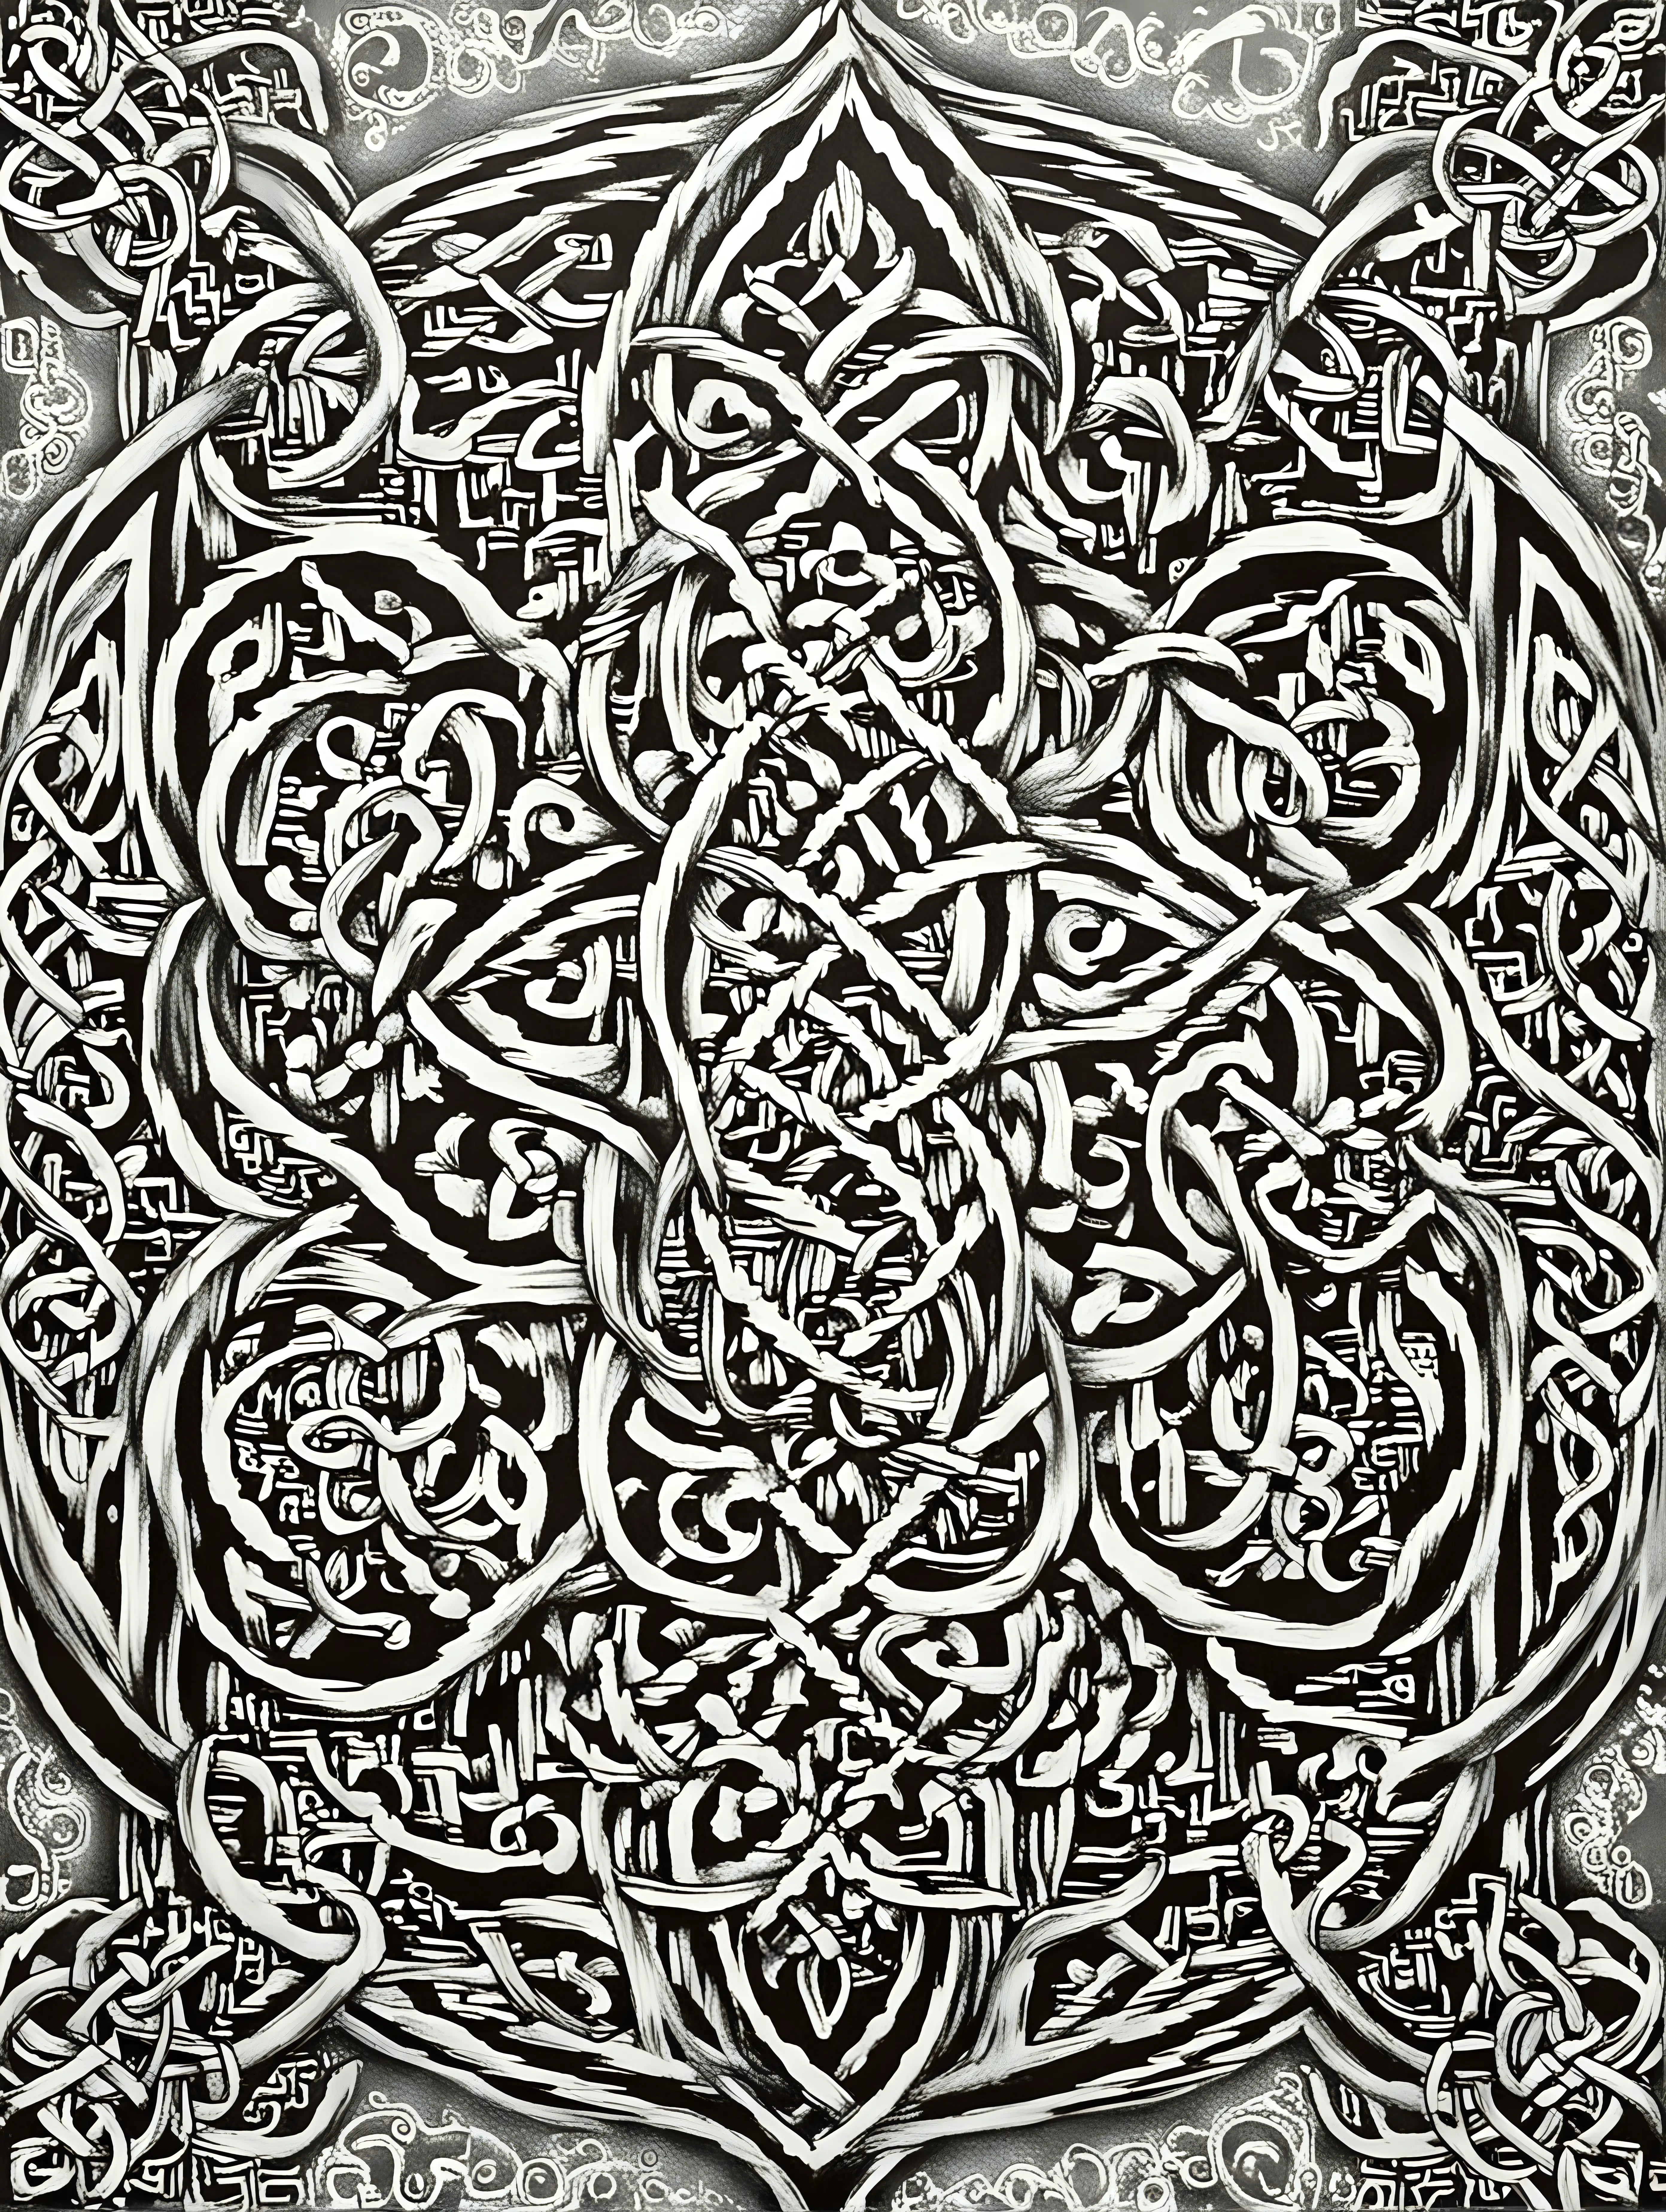 Symmetrical Celtic Knot and Henna Patterns on Flower Background